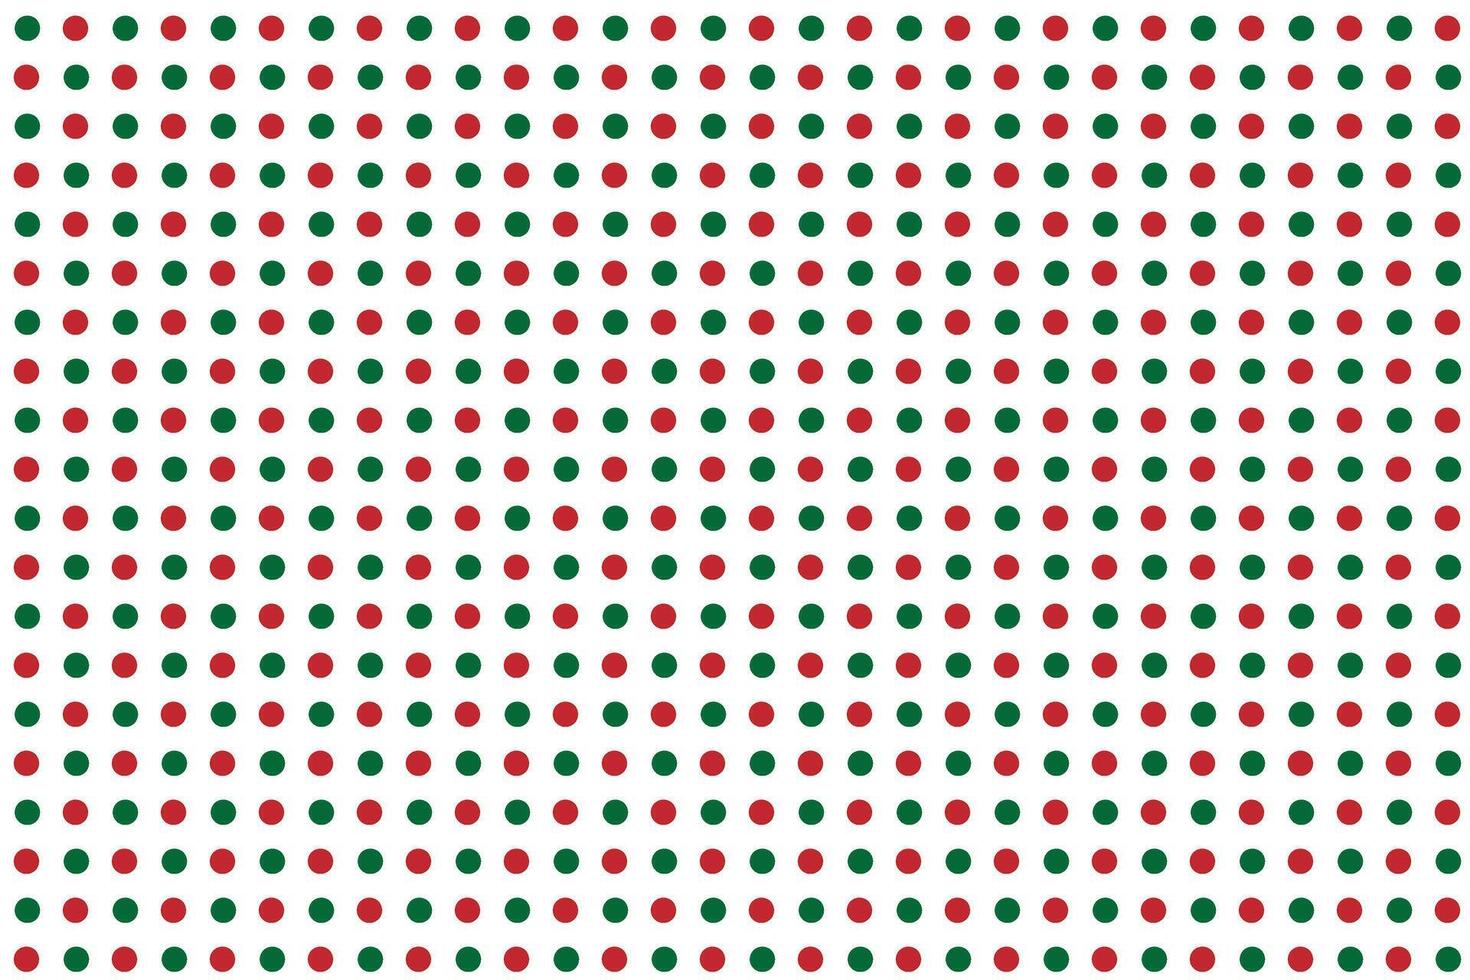 rood groen polka dots patroon naadloos. Kerstmis achtergrond vector